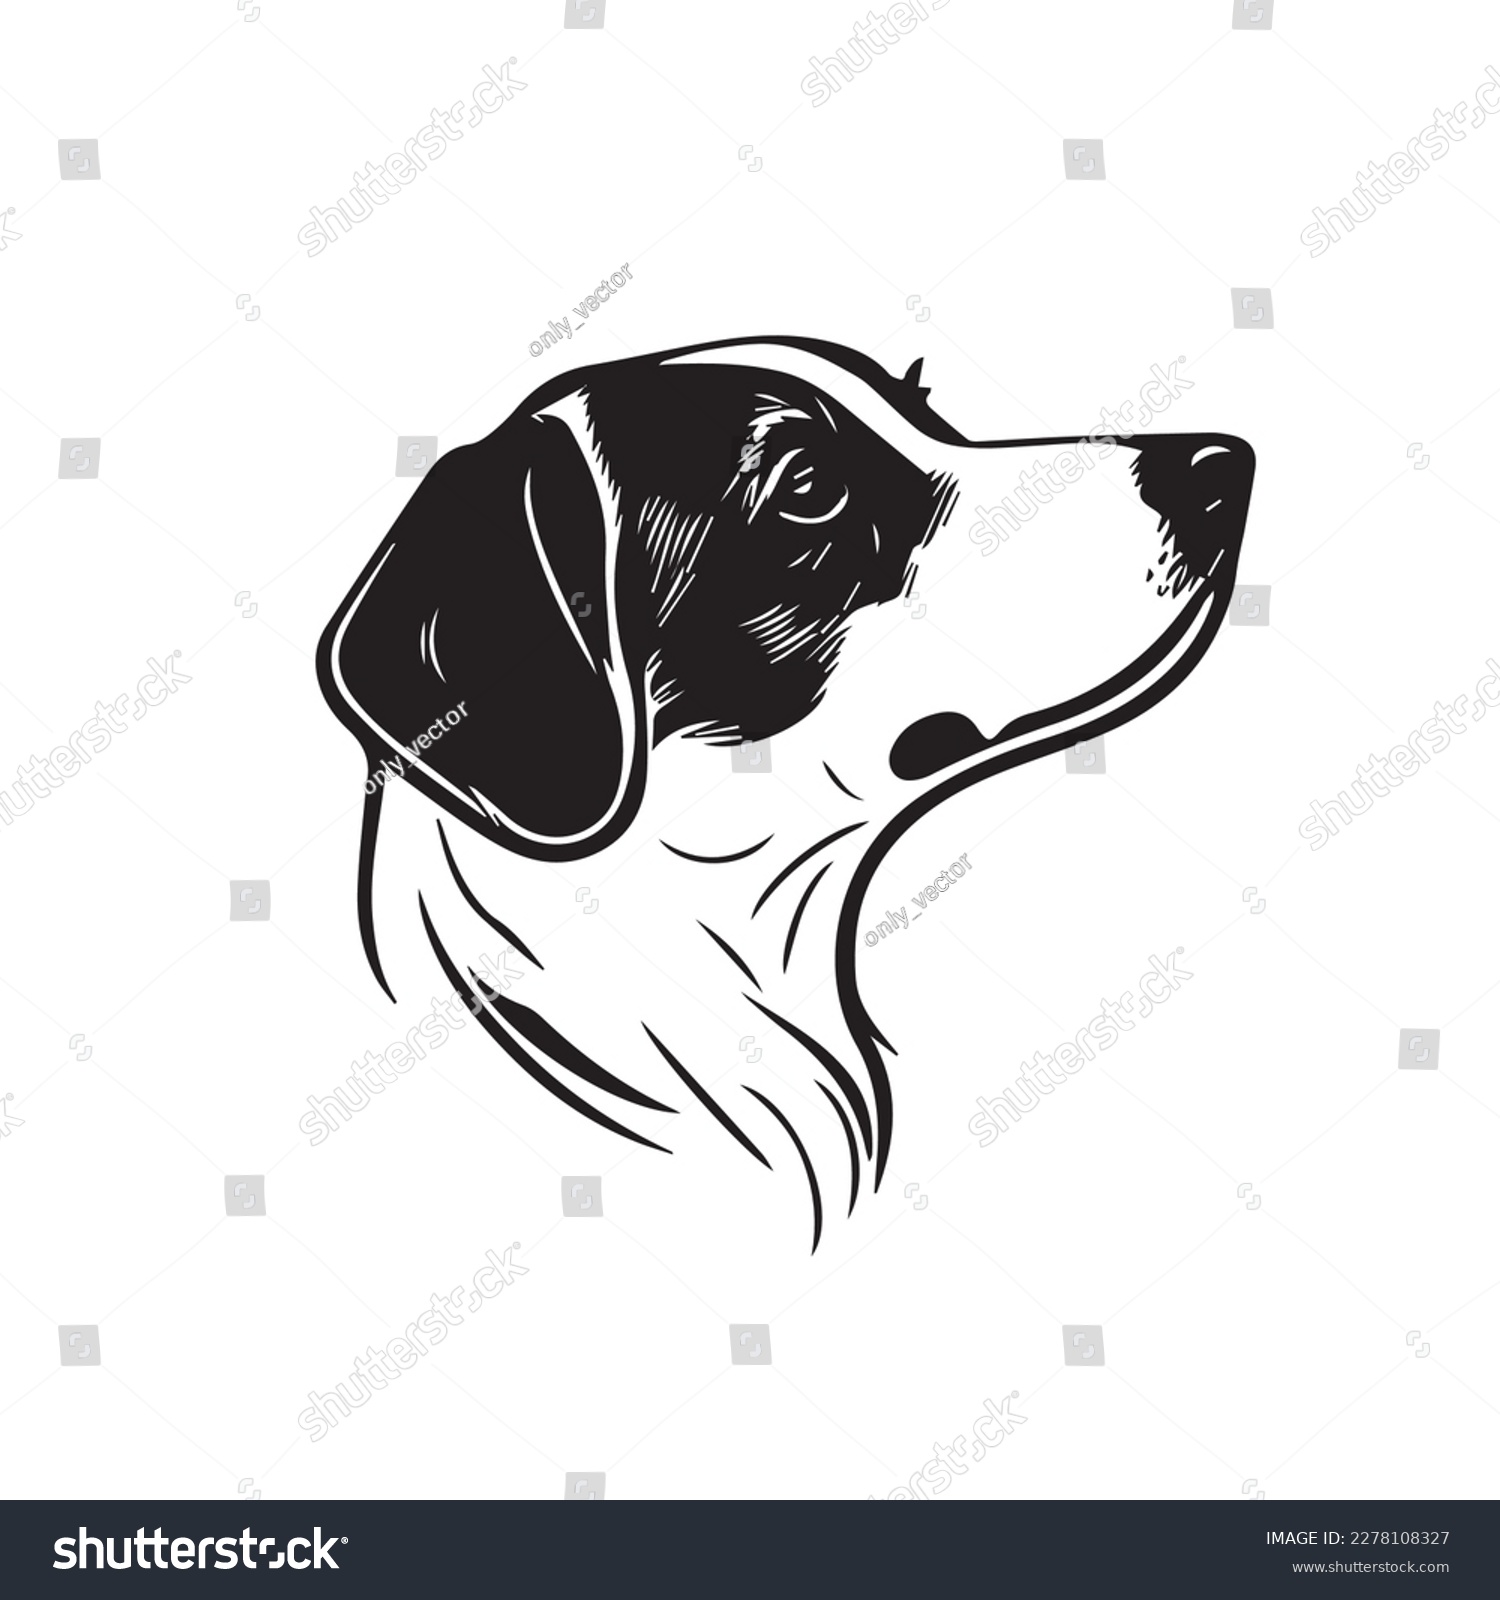 SVG of beagle dog simple vector black image on white background. Silhouette svg vector illustration animal, laser cutting cnc. svg